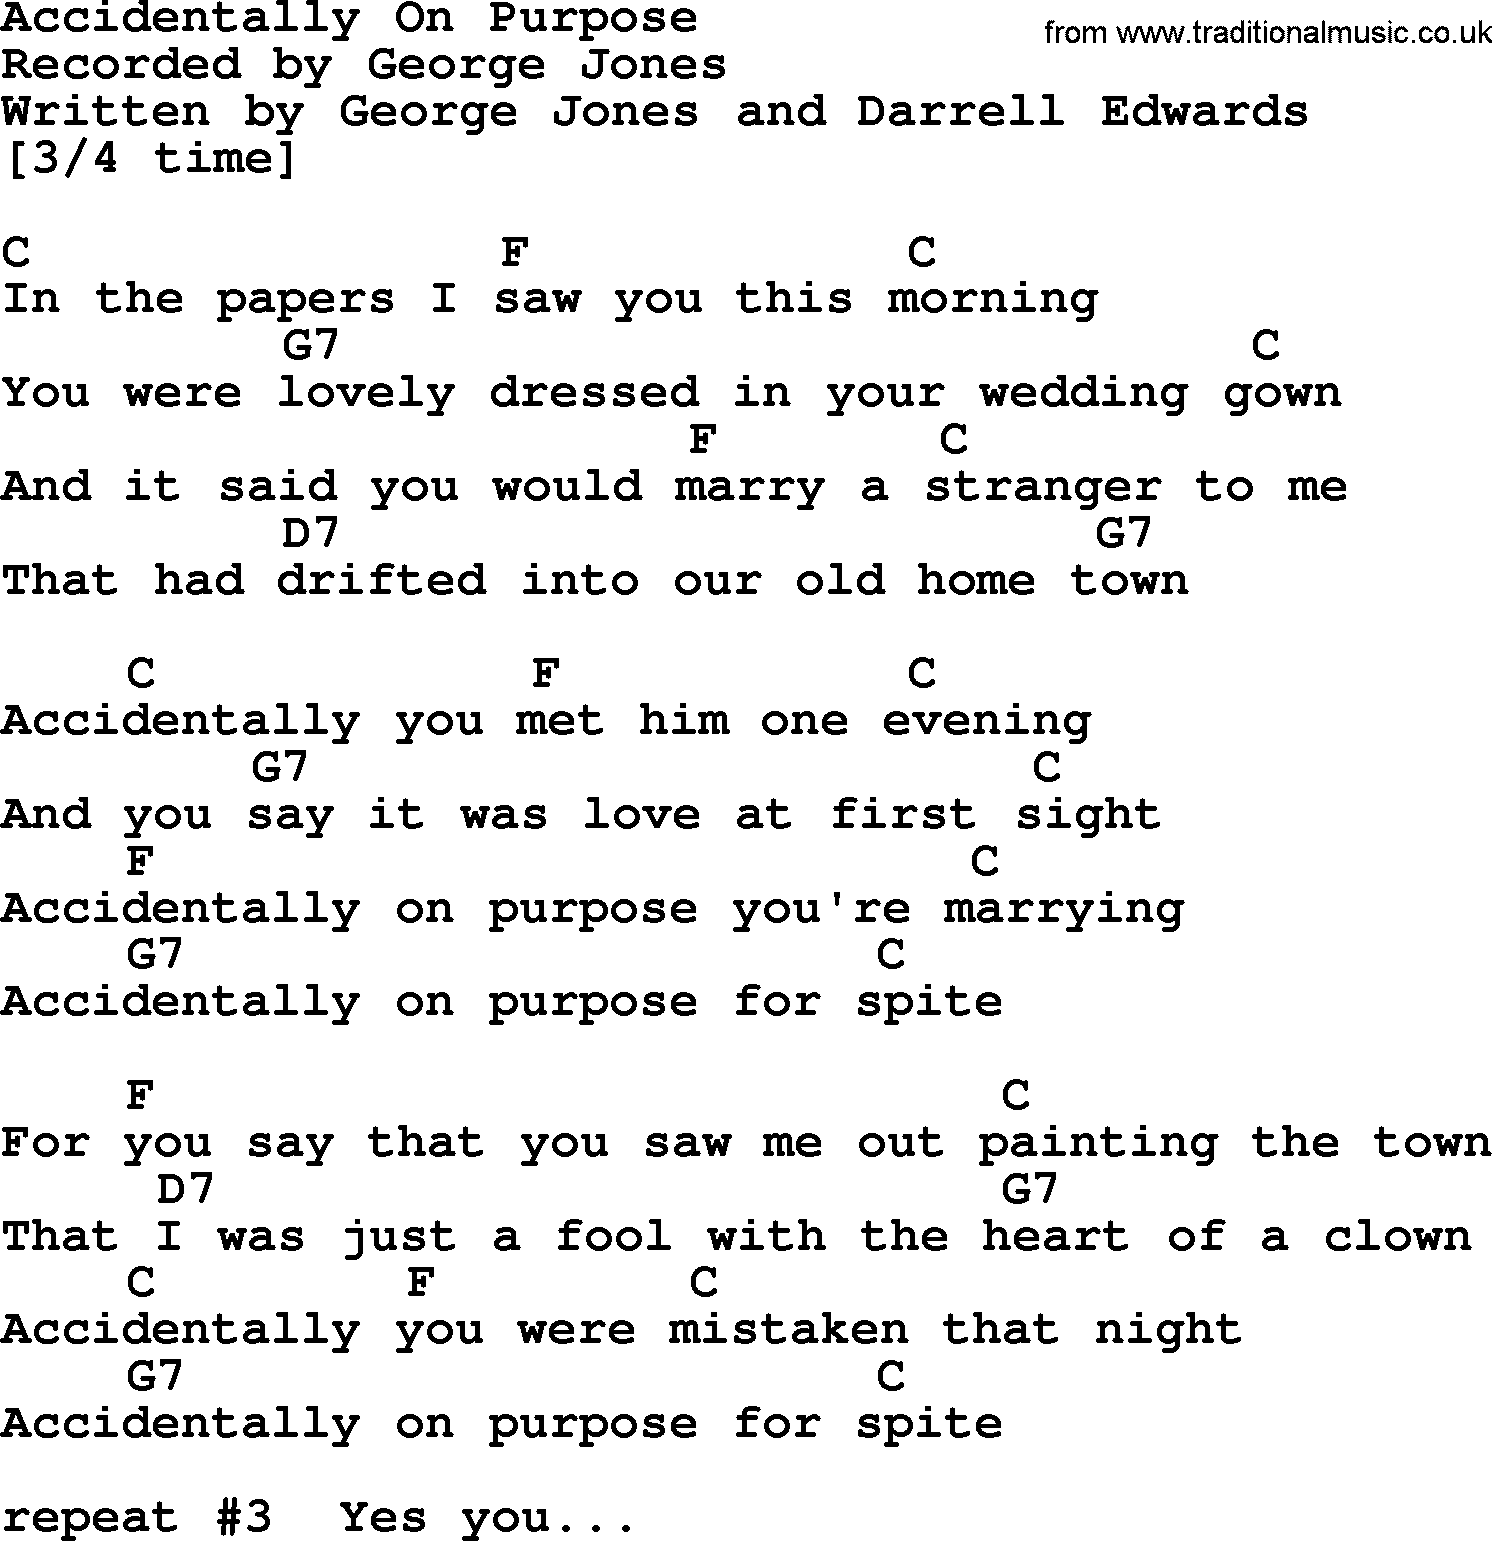 George Jones song: Accidentally On Purpose, lyrics and chords